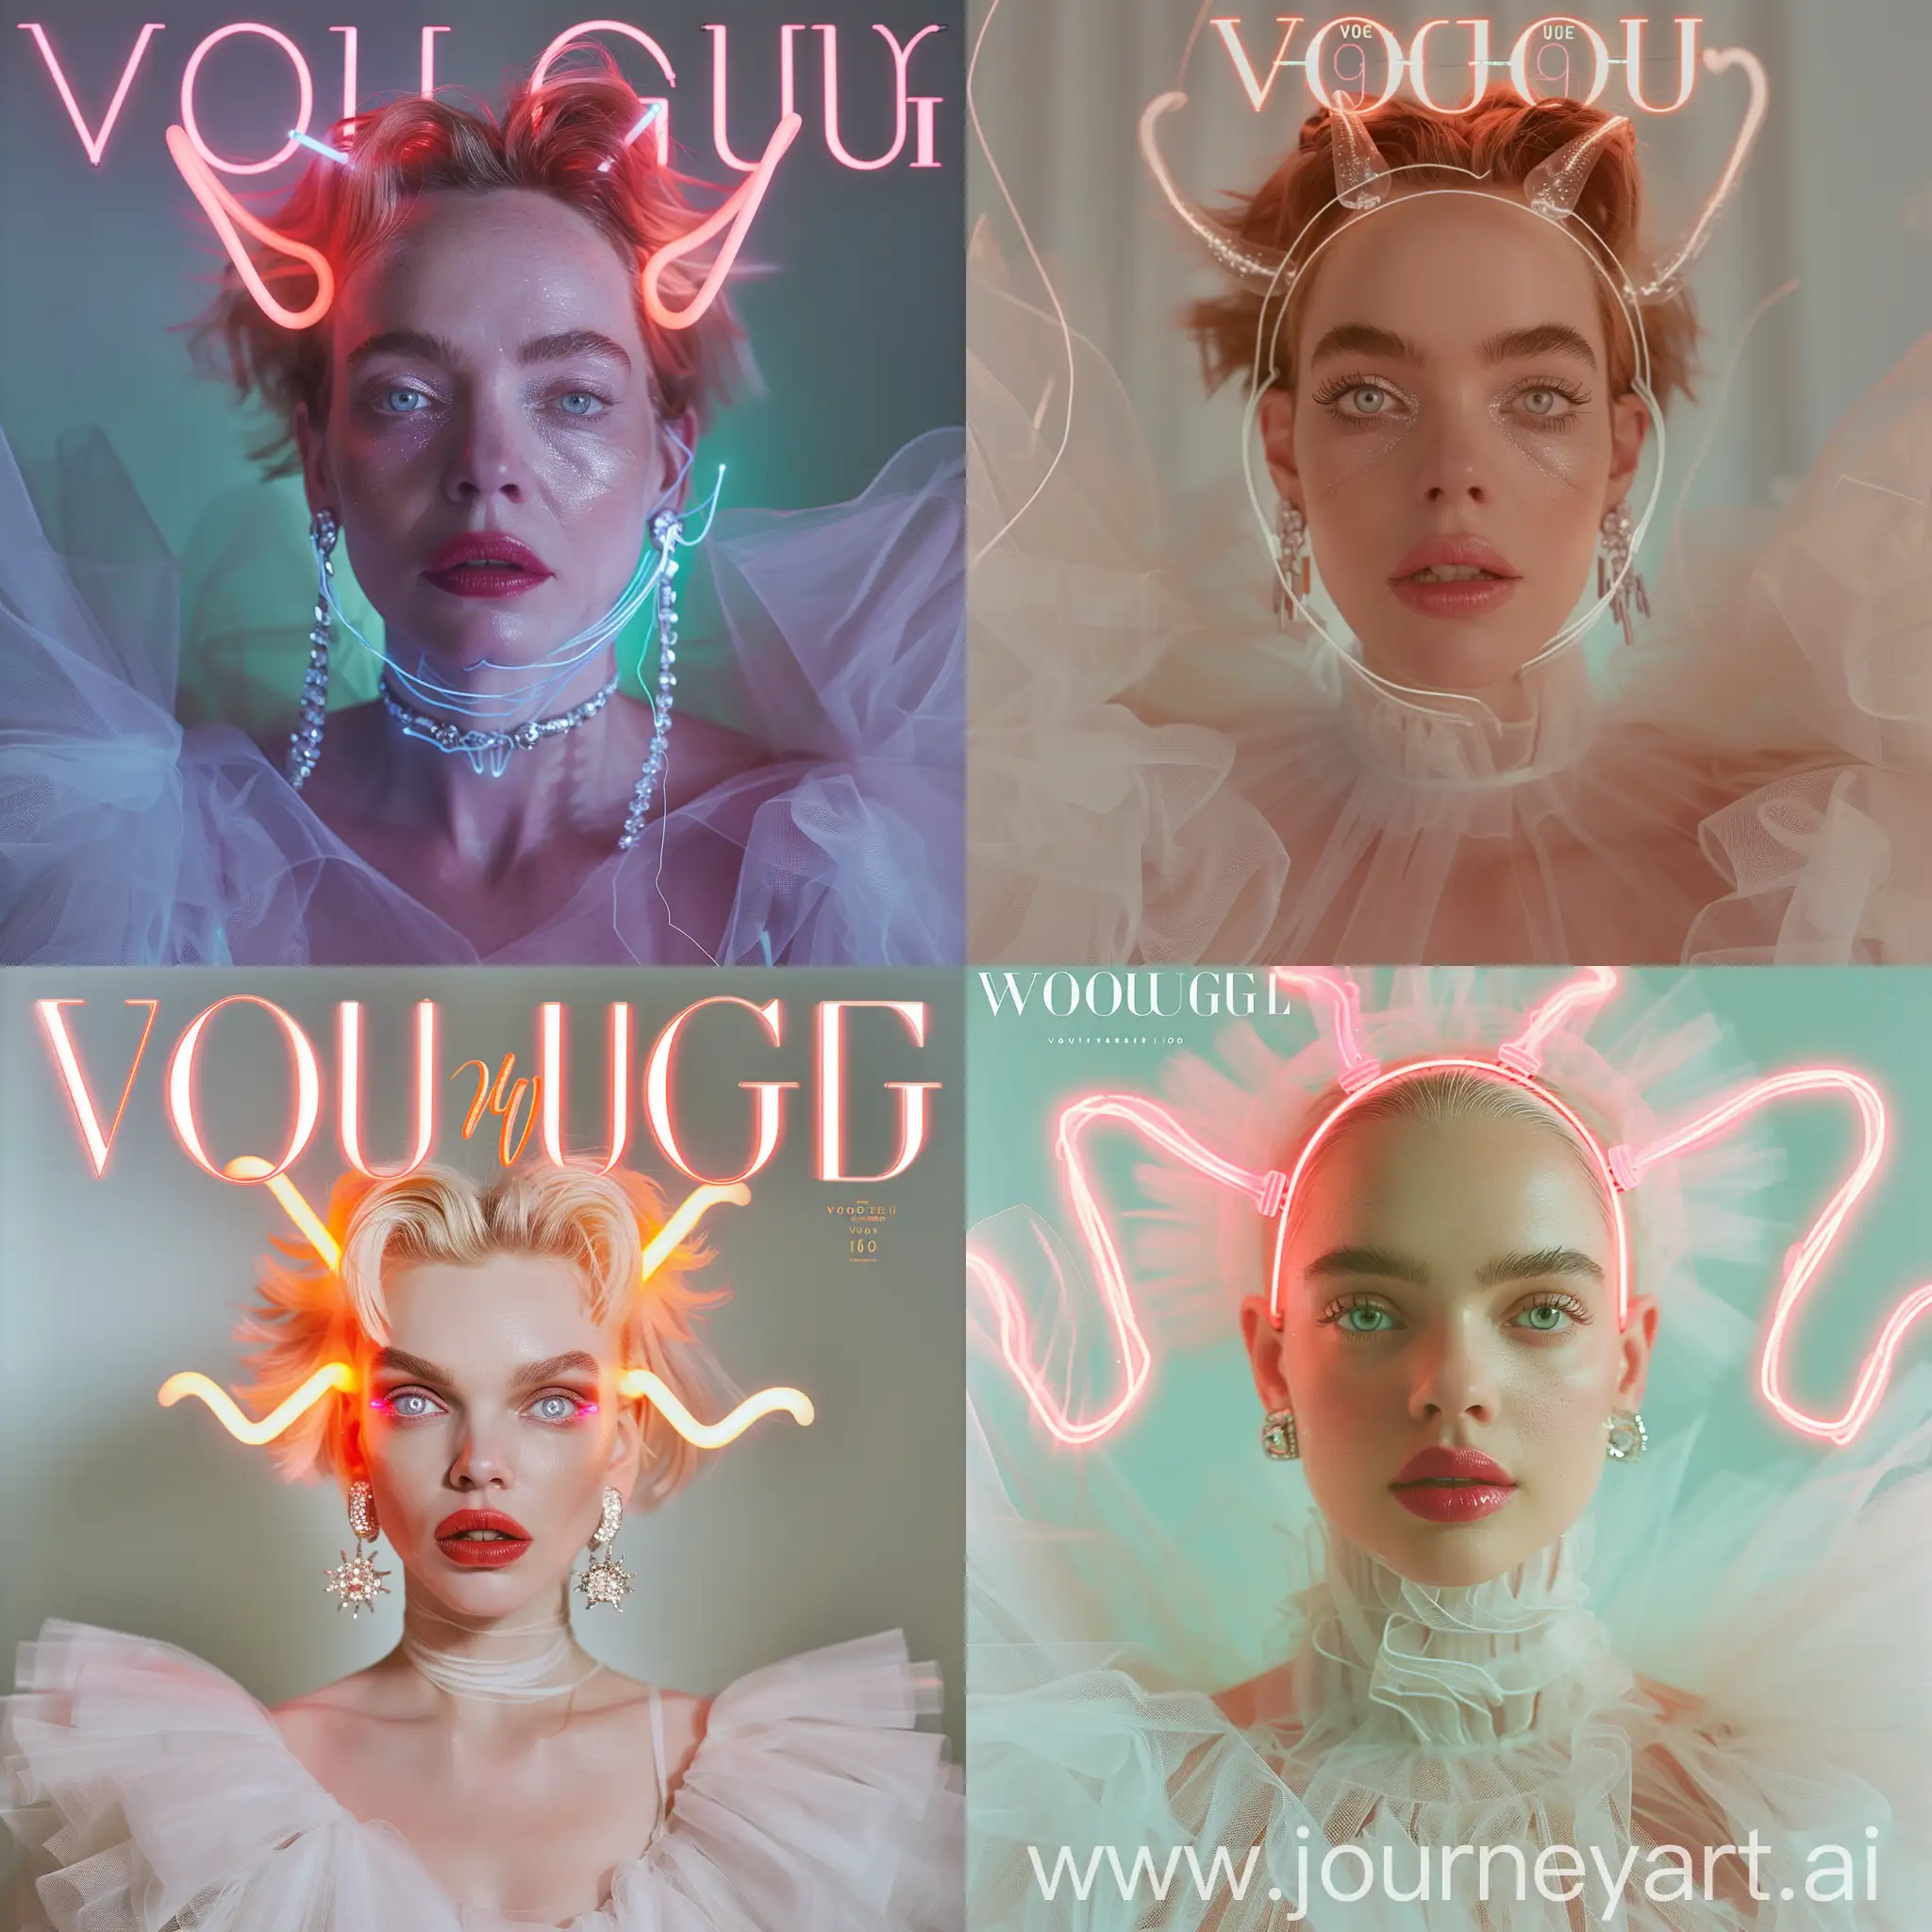 Vampire-Fashion-Anya-TaylorJoy-and-Madonna-in-Neon-Peignoirs